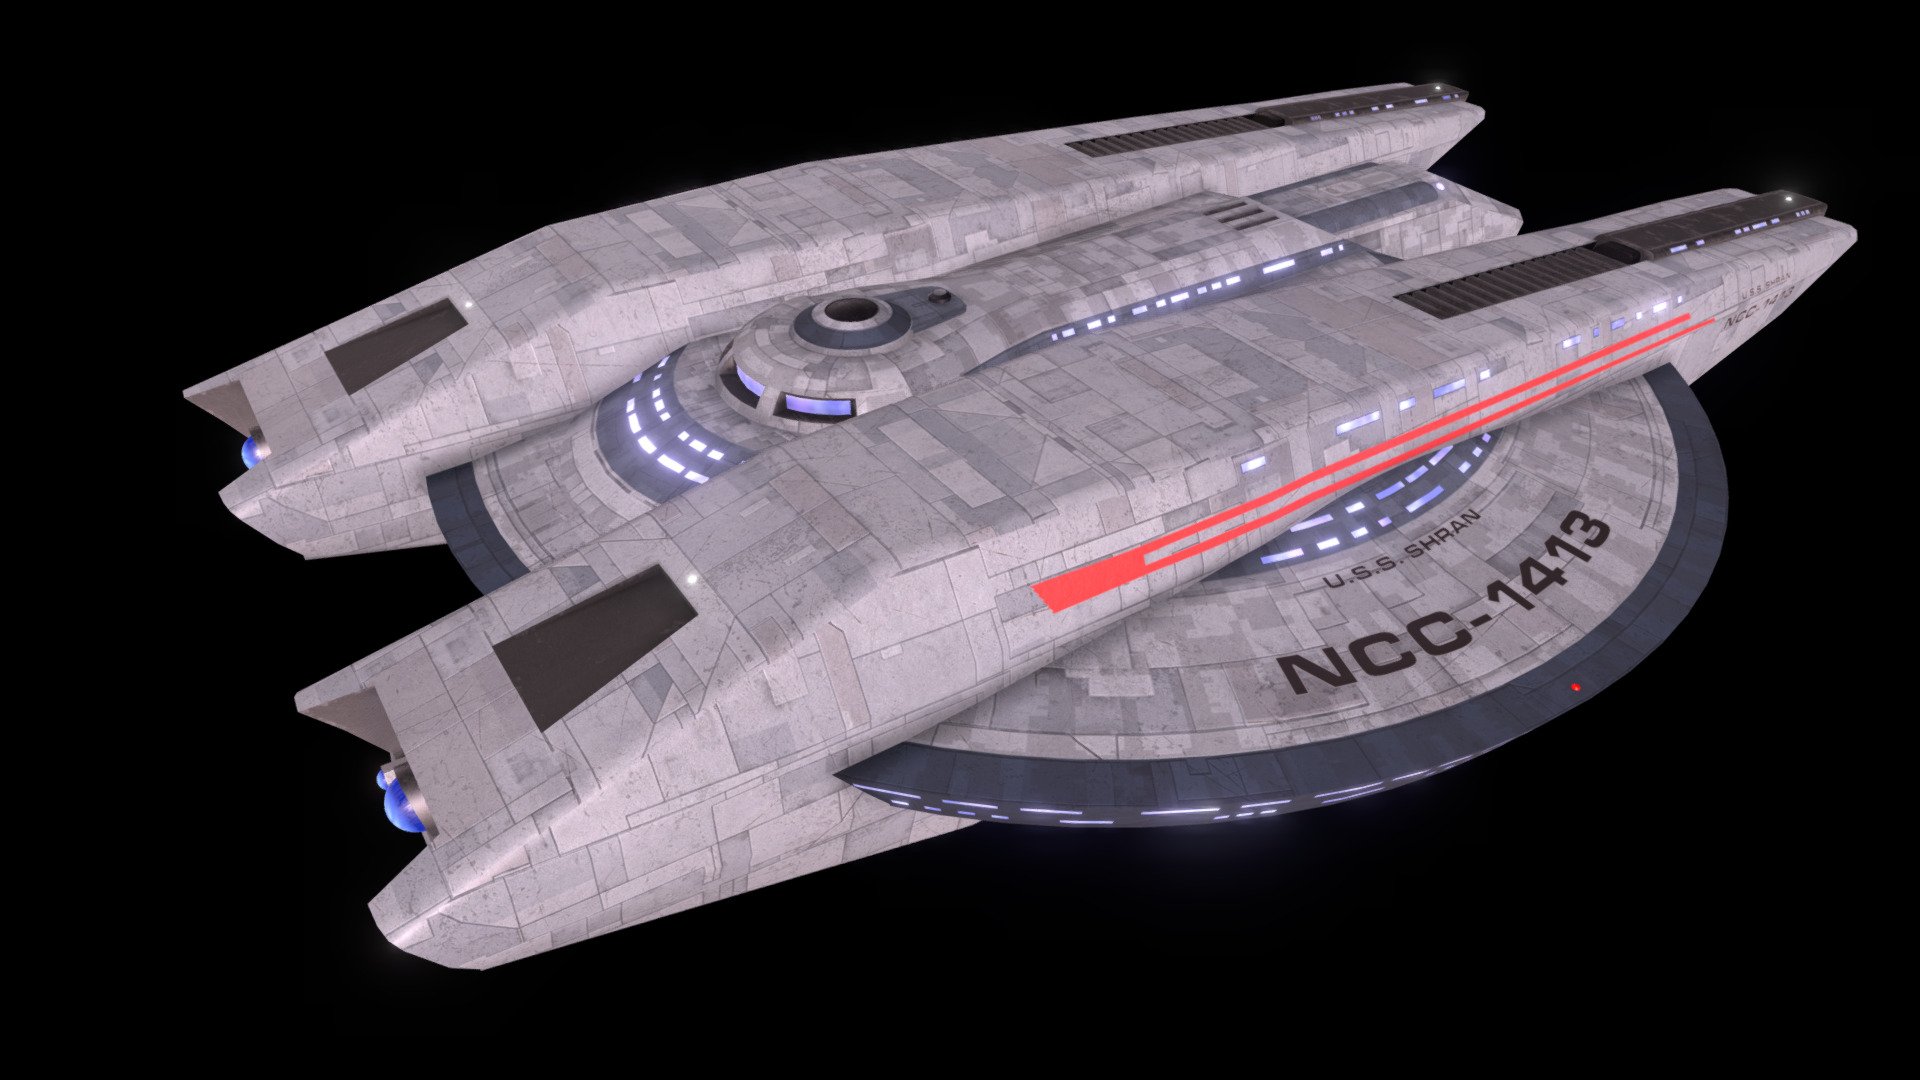 My 3D model of the Magee-Class starship  USS Shran, as seen in Star Trek: Discovery's season 1 opener &ldquo;The Vulcan Hello